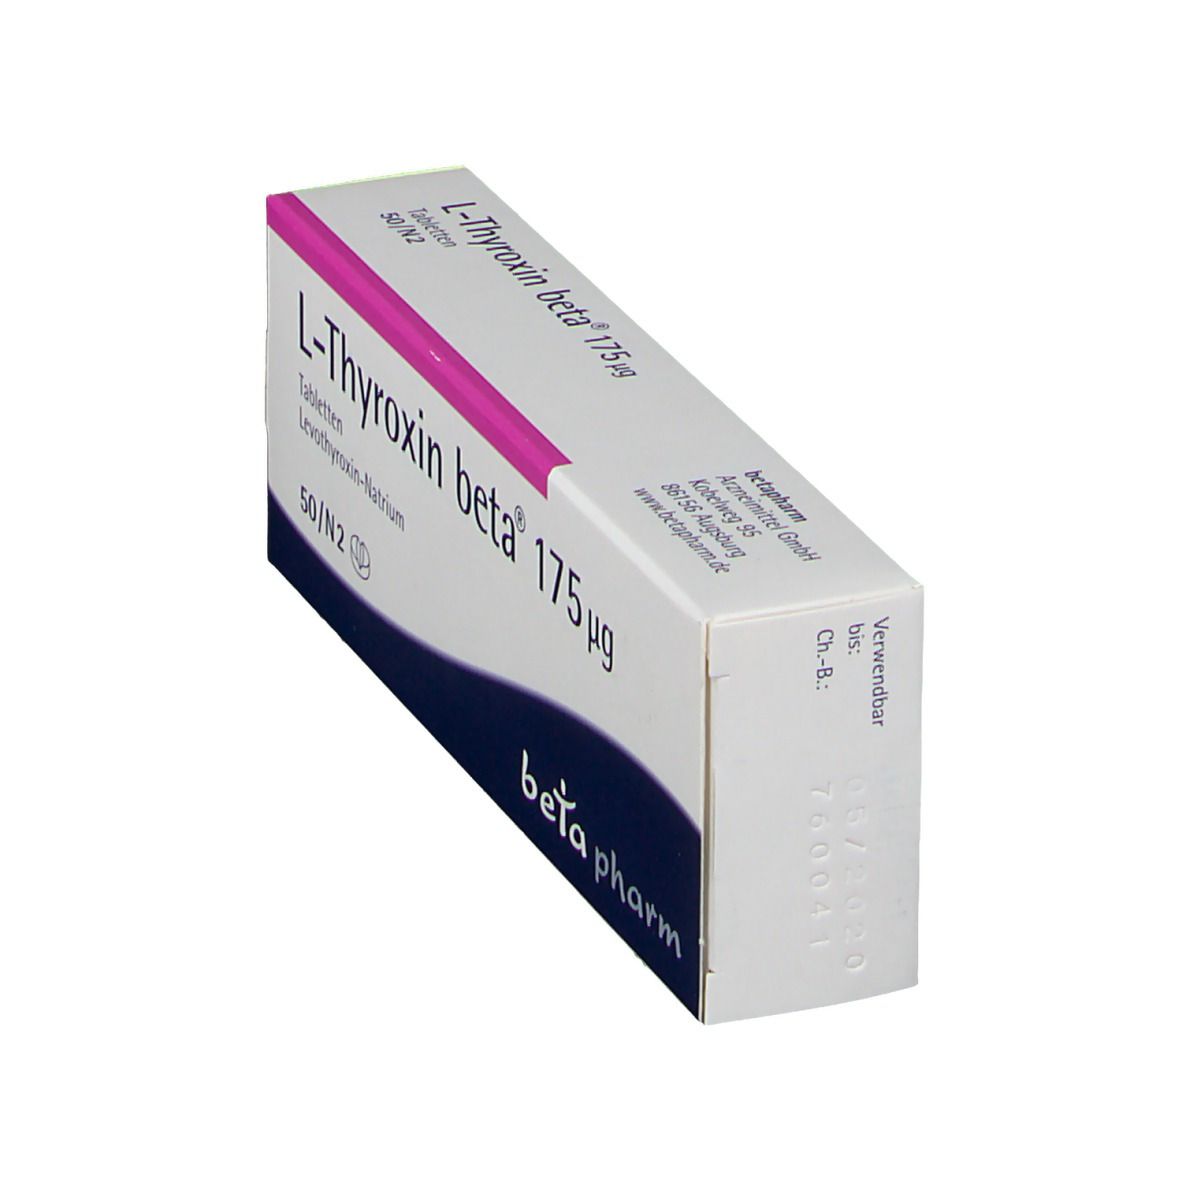 L-Thyroxin beta® 175 ug